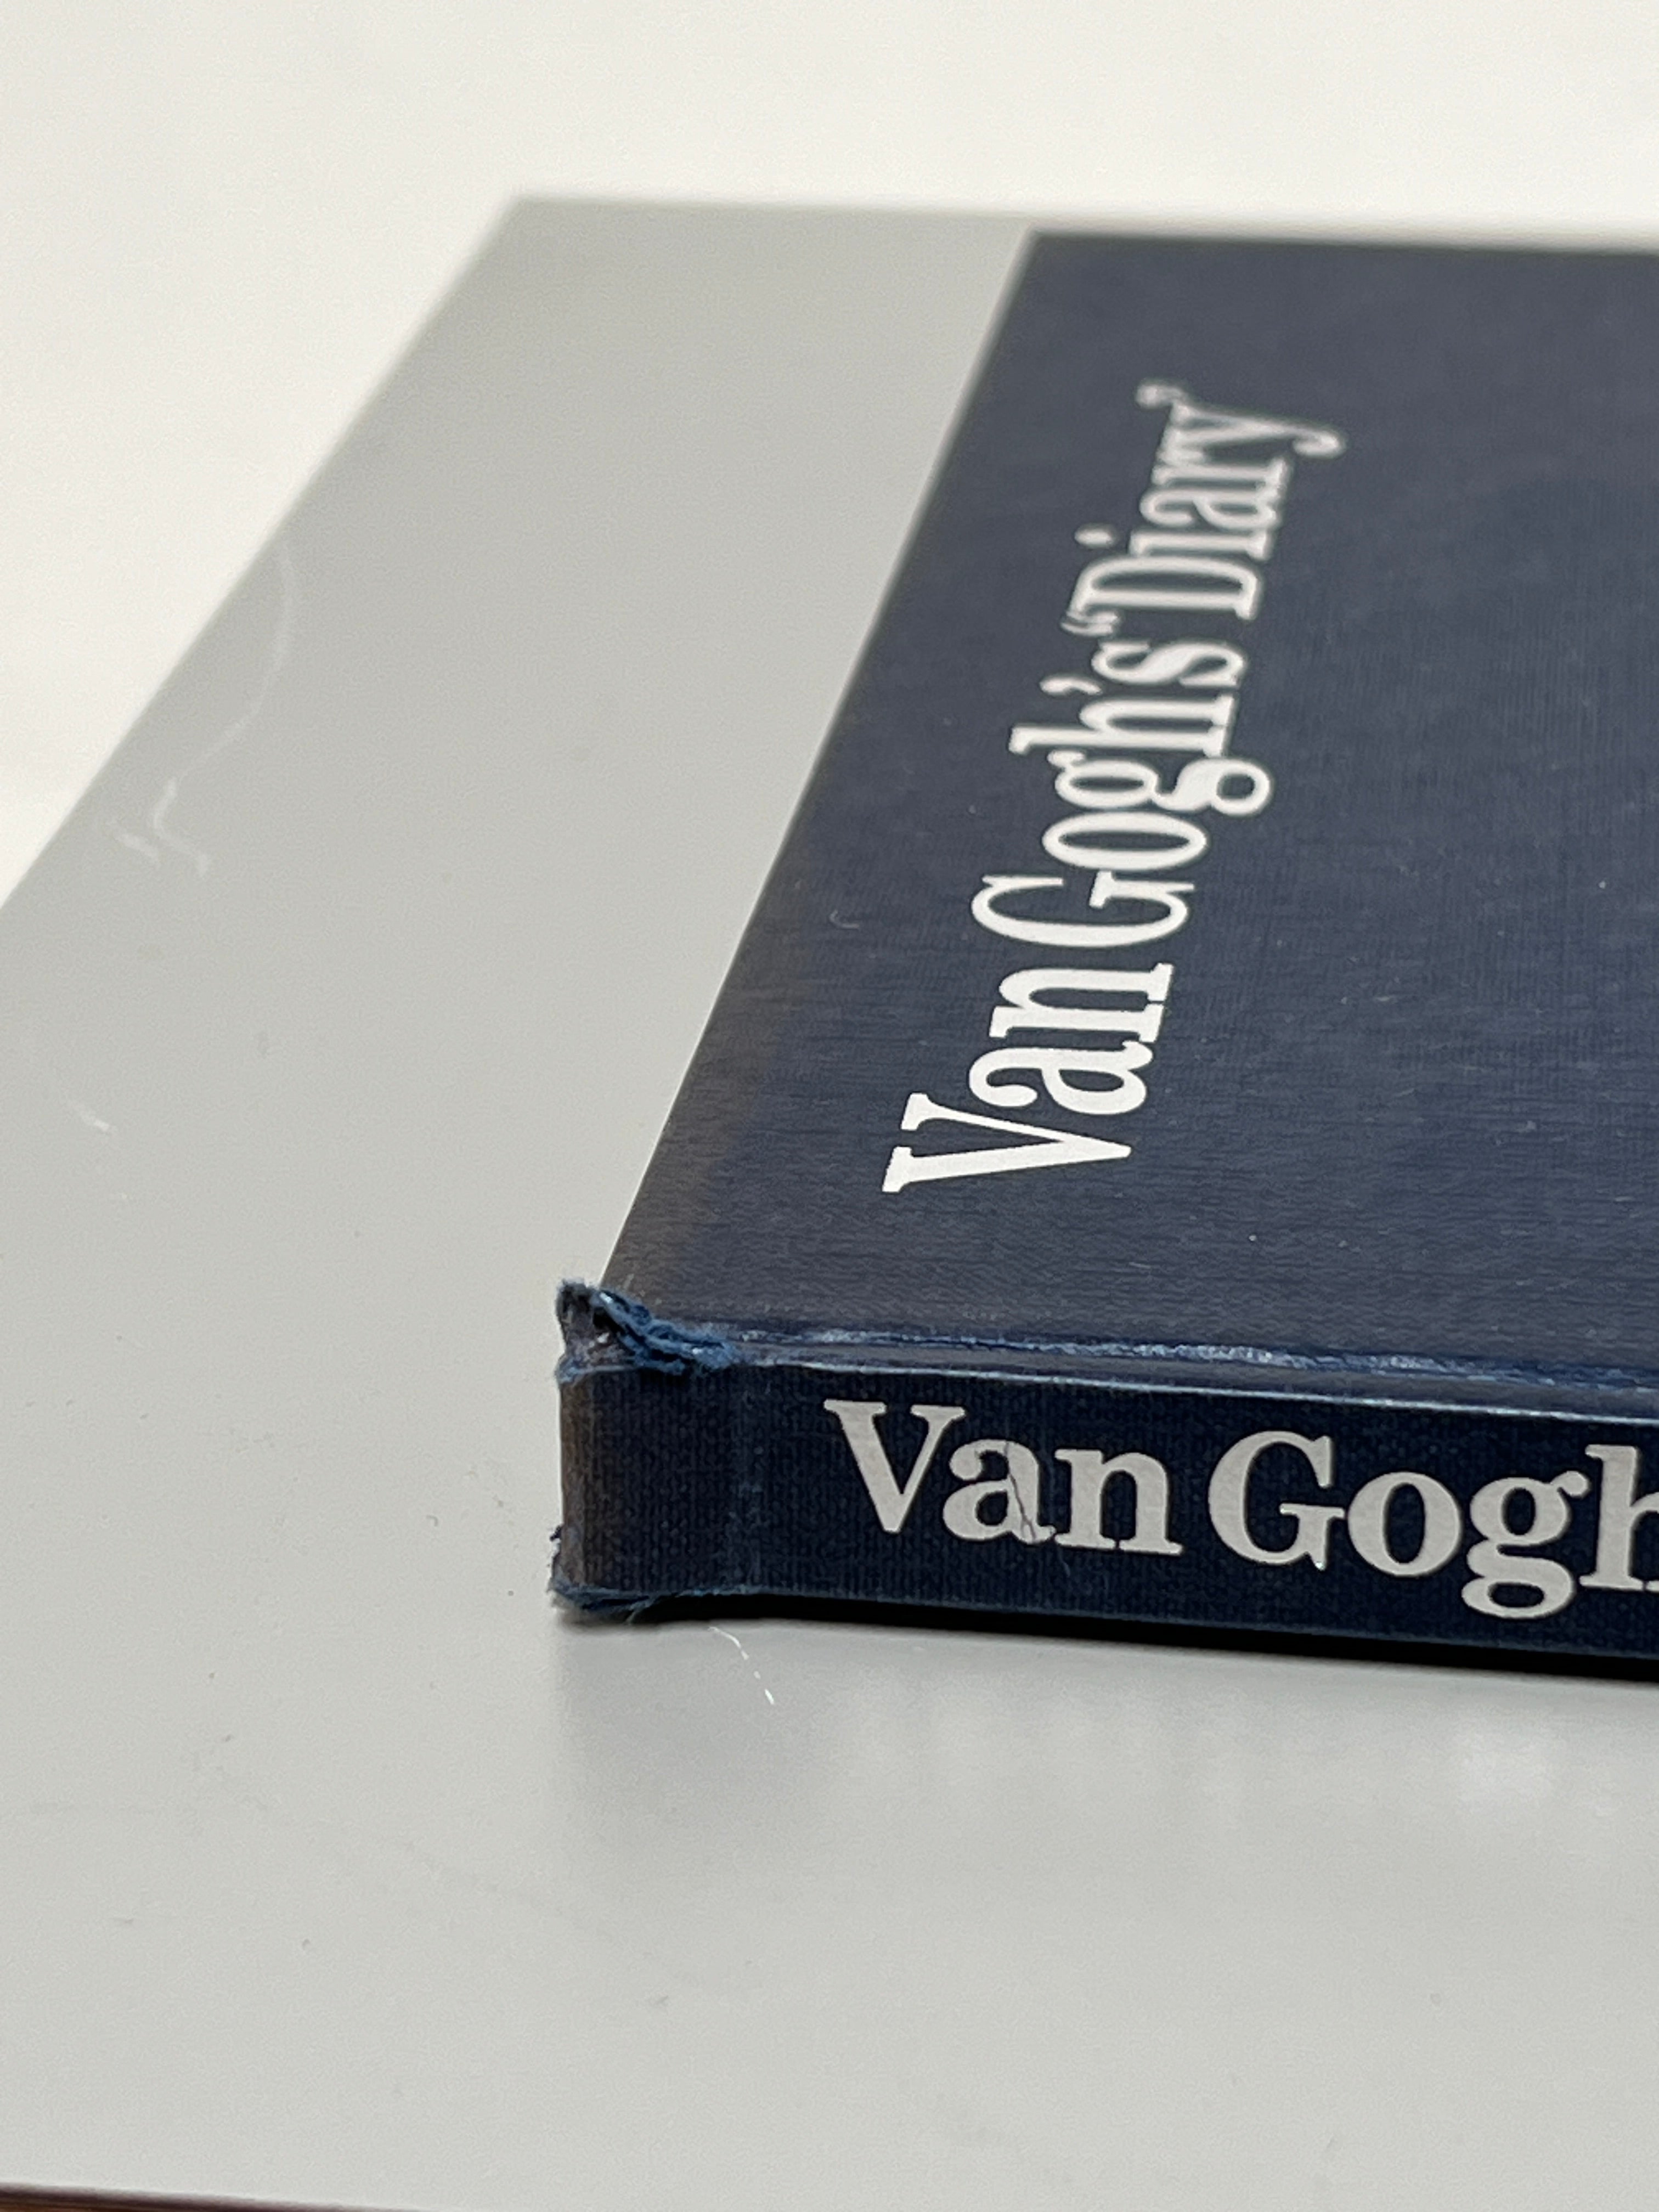 Van Gogh's "Diary", 1970